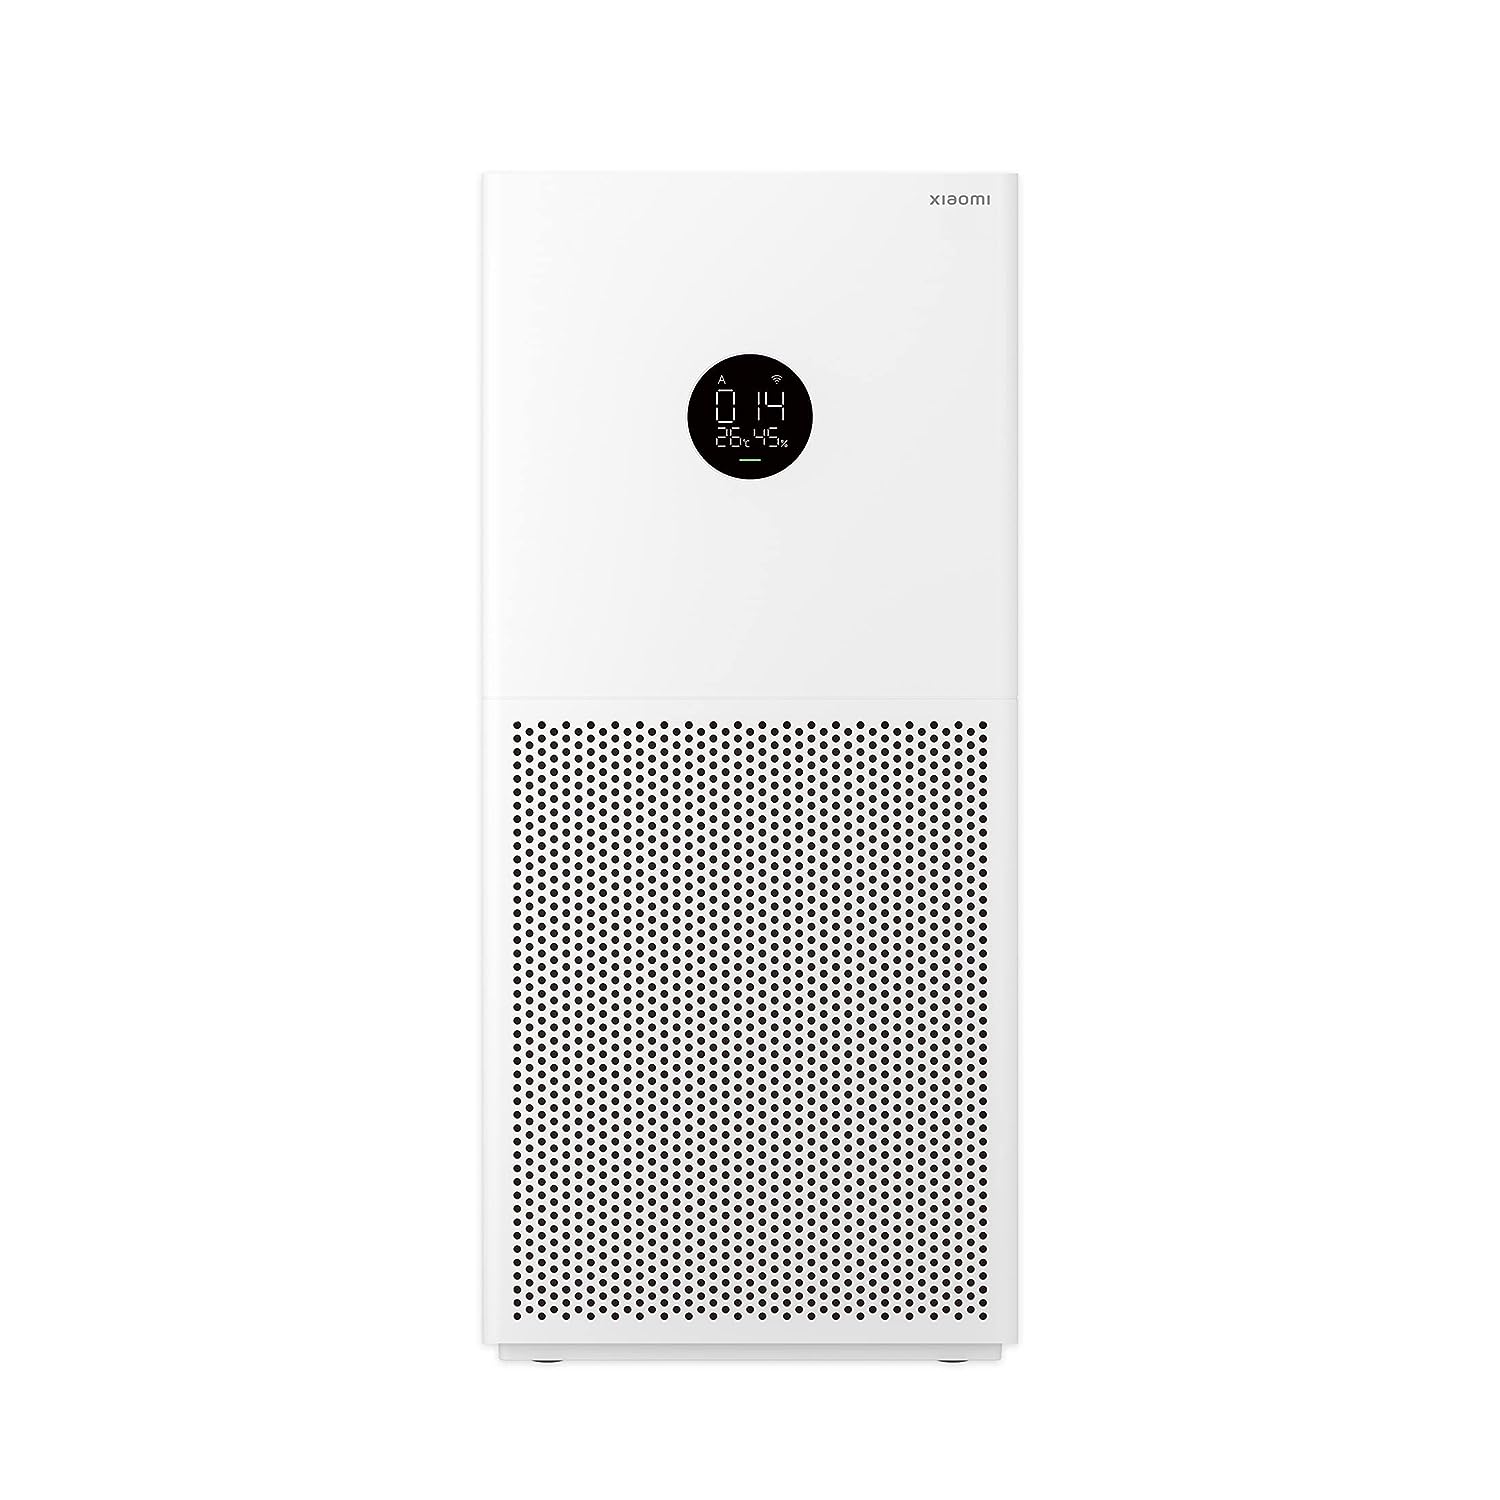  Xiaomi Mi Air Purifier Anti-Formaldehyde Filter, White, 20.4 x  20.8 x 30.6 : Home & Kitchen